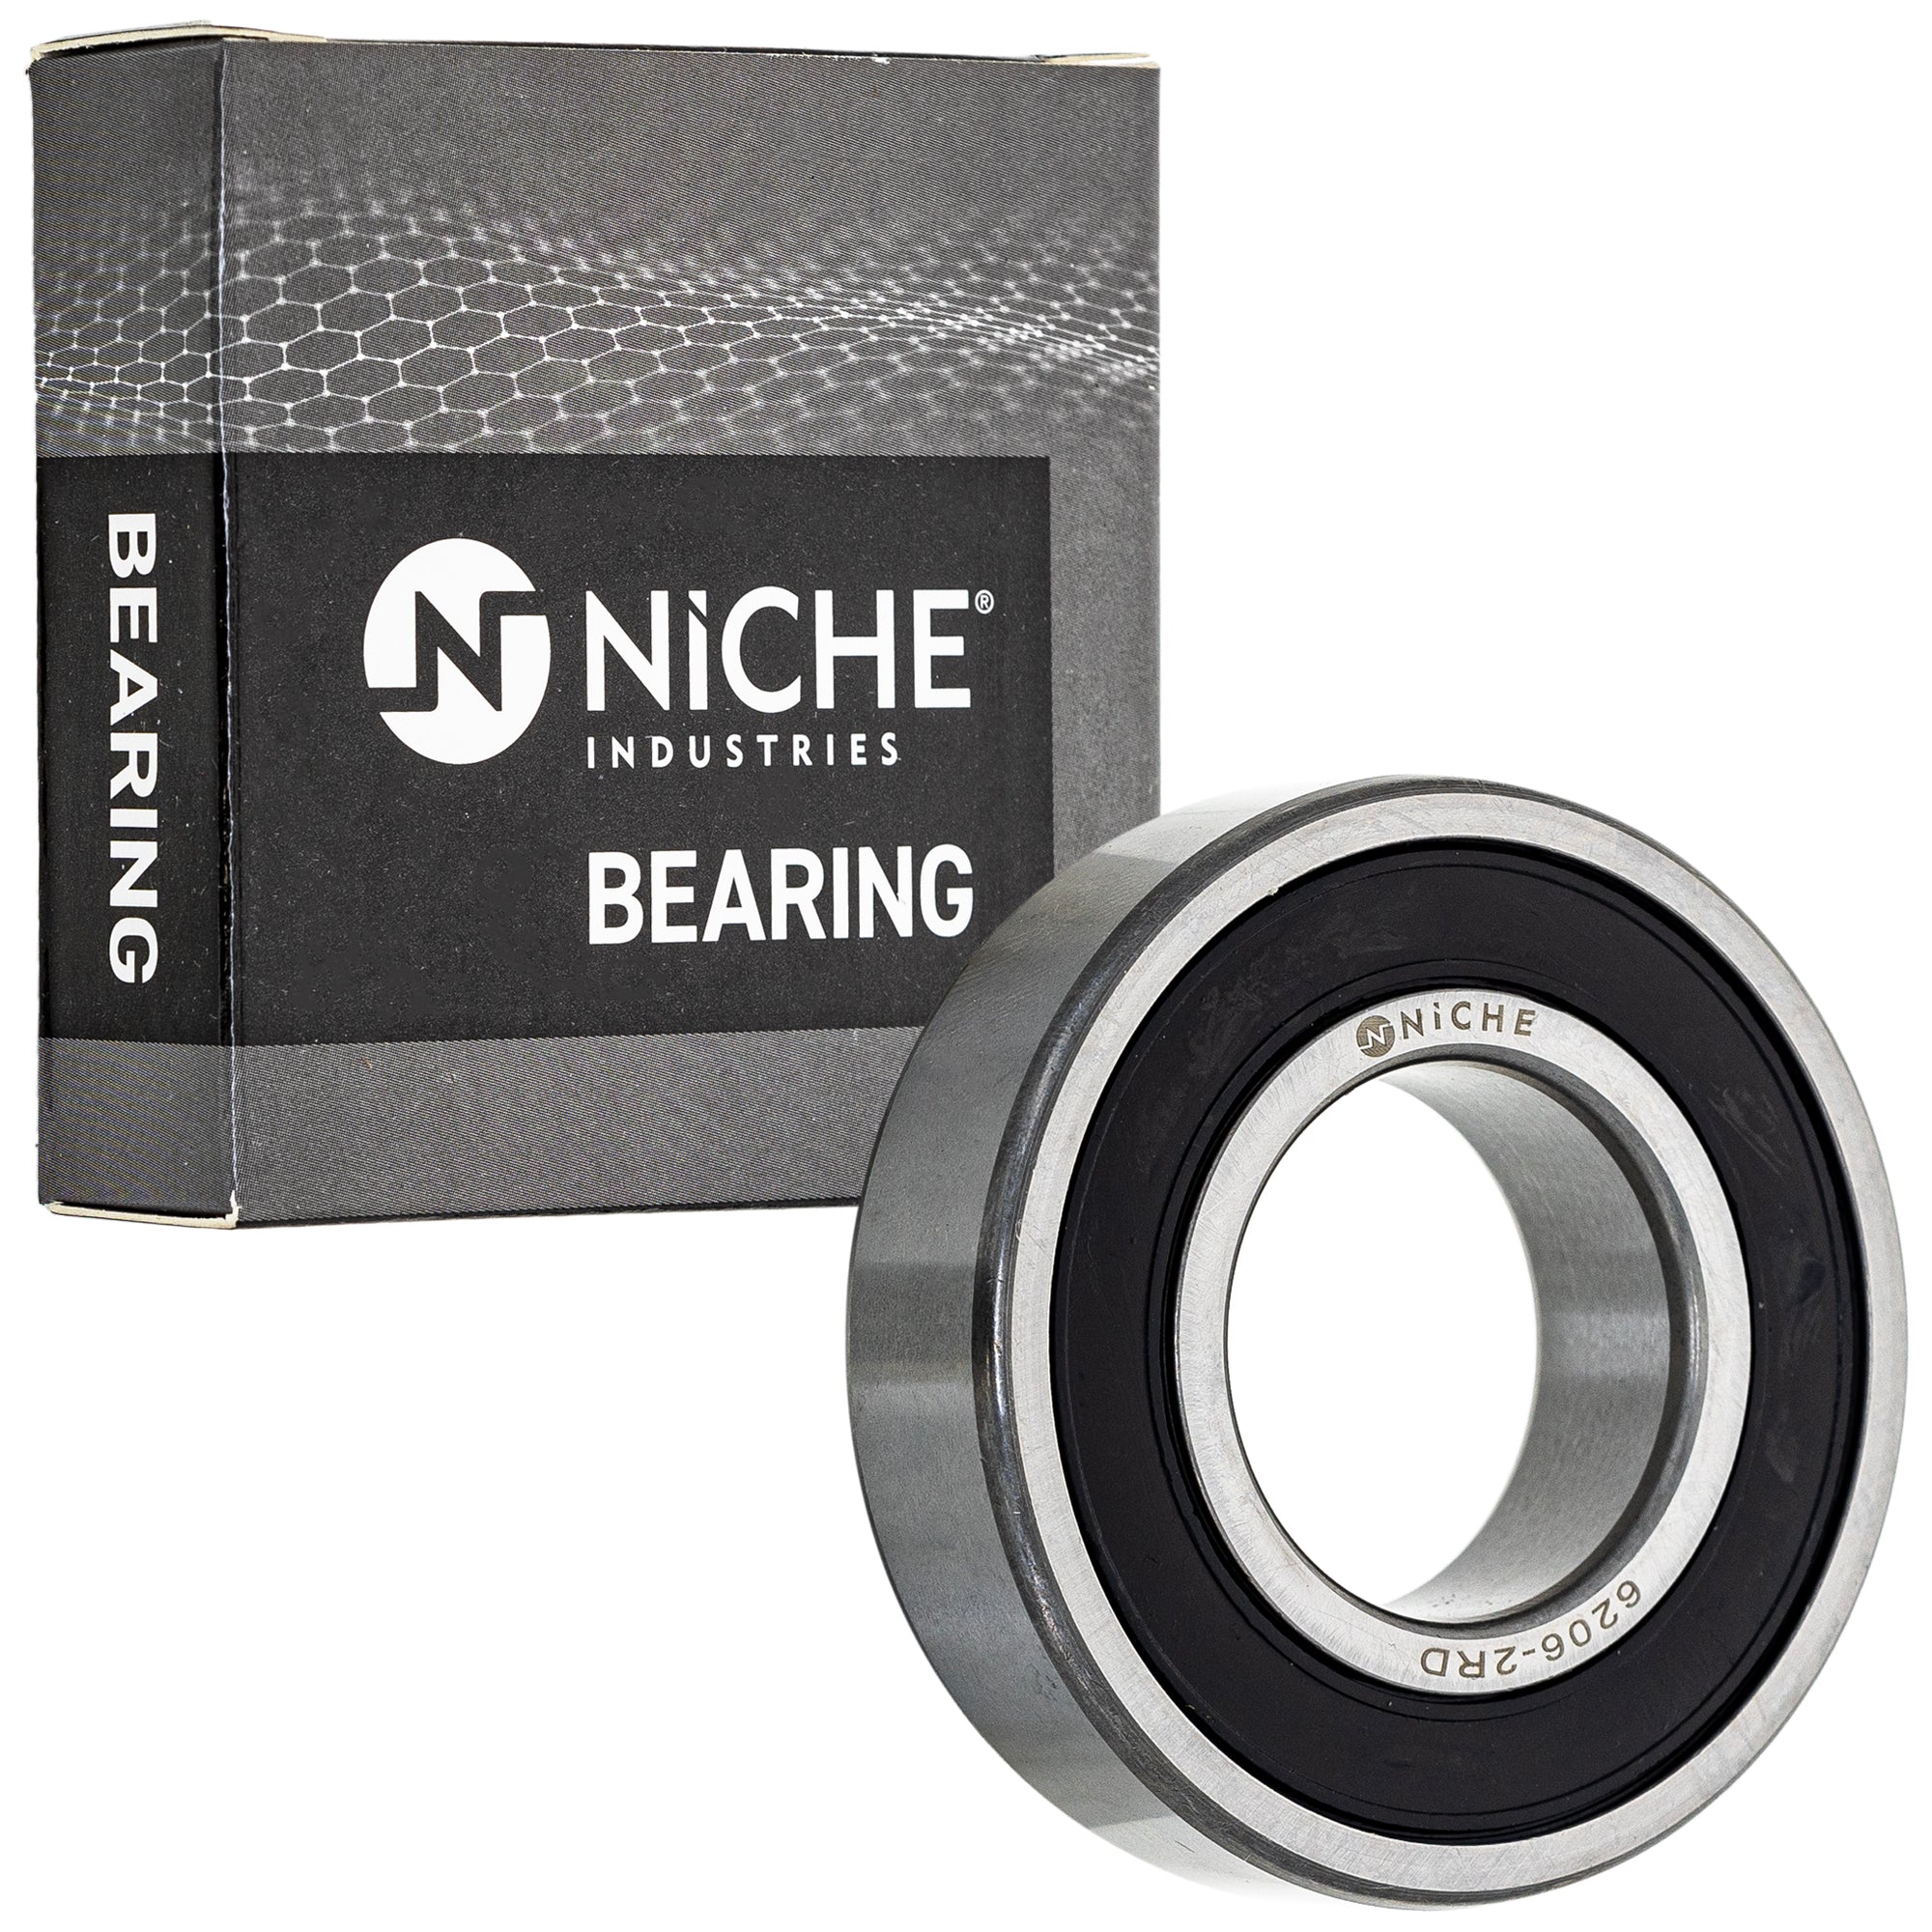 NICHE 519-CBB2270R Bearing for zOTHER ZRX1100 ZR1100 Z1 YZF600R